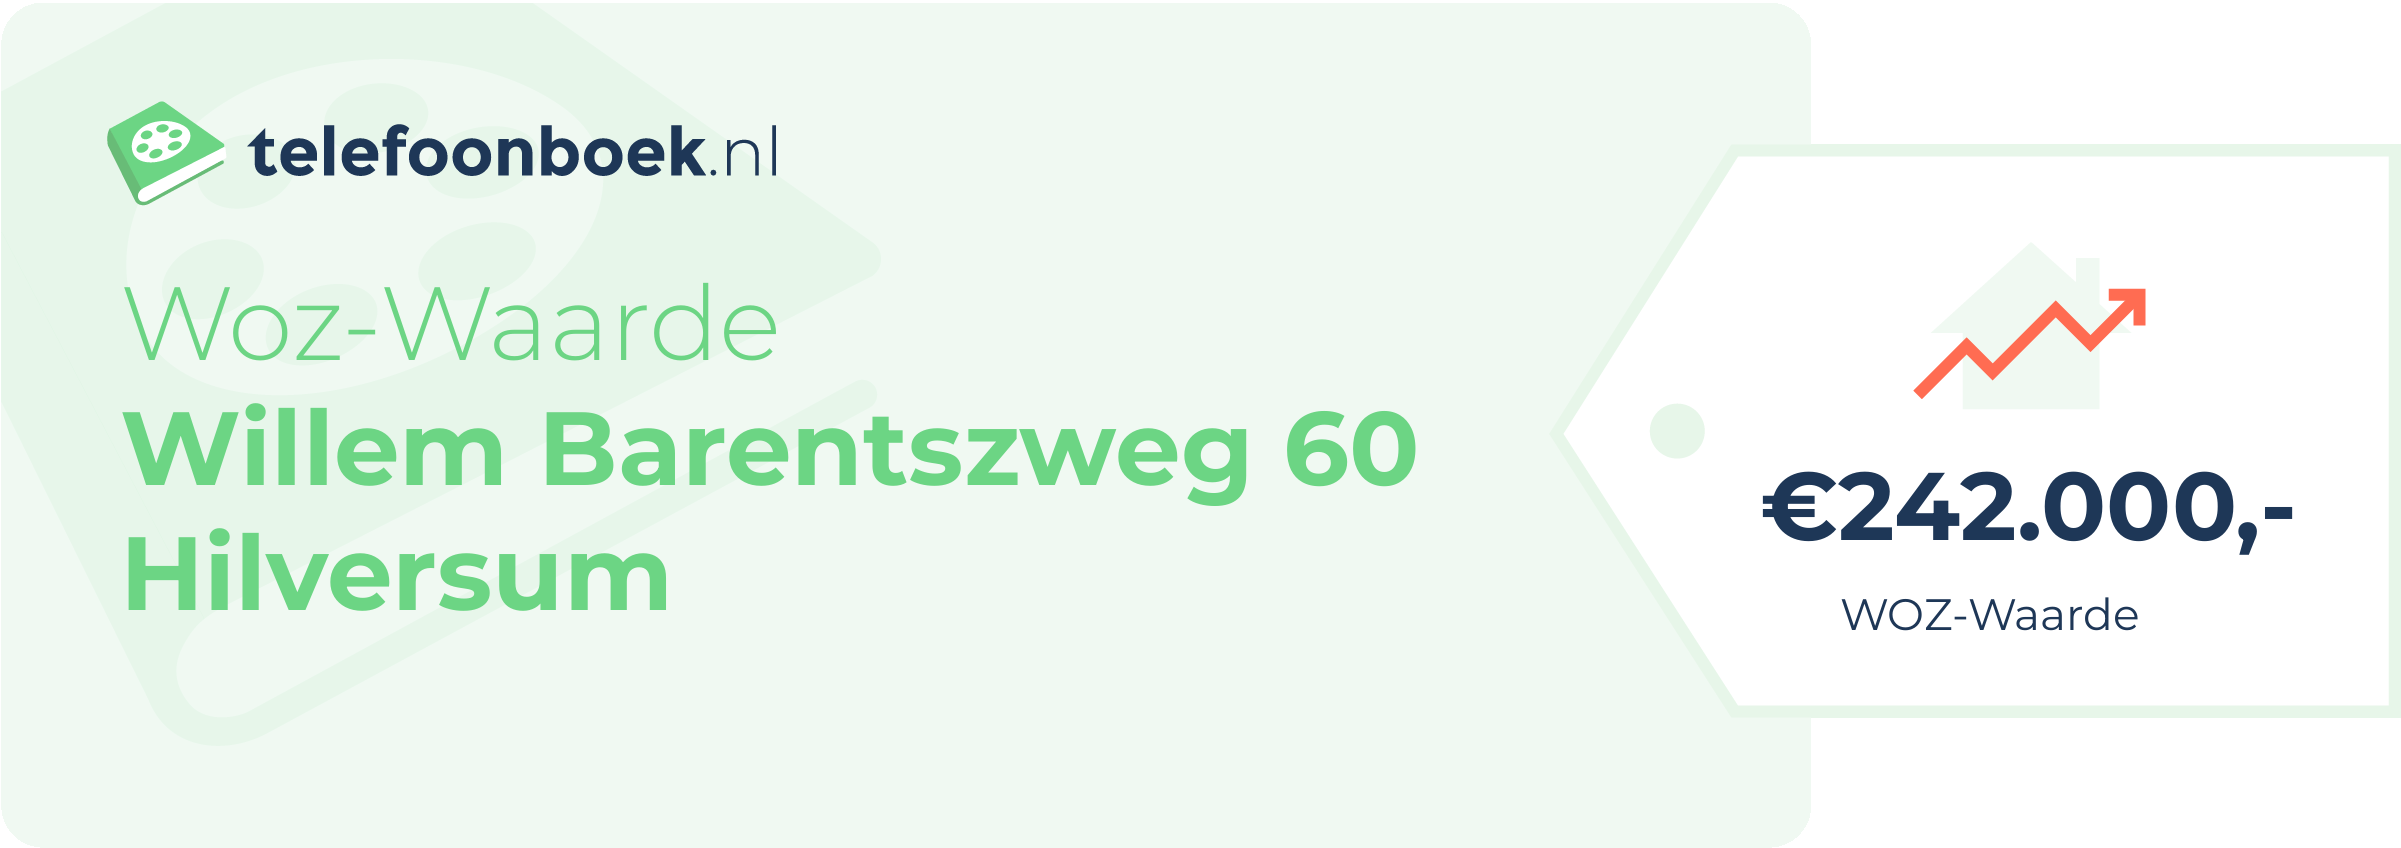 WOZ-waarde Willem Barentszweg 60 Hilversum